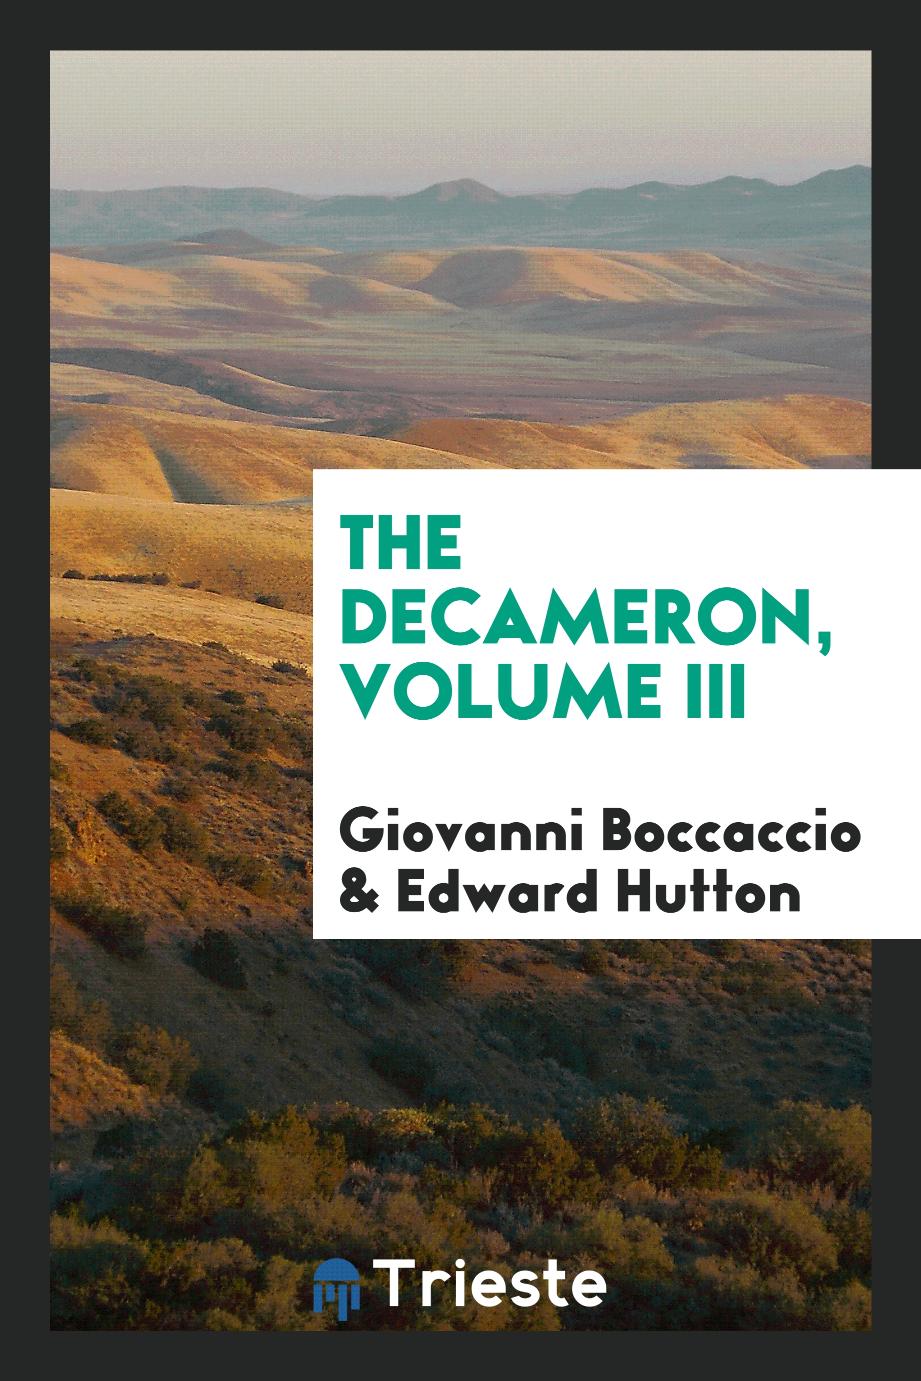 The Decameron, Volume III